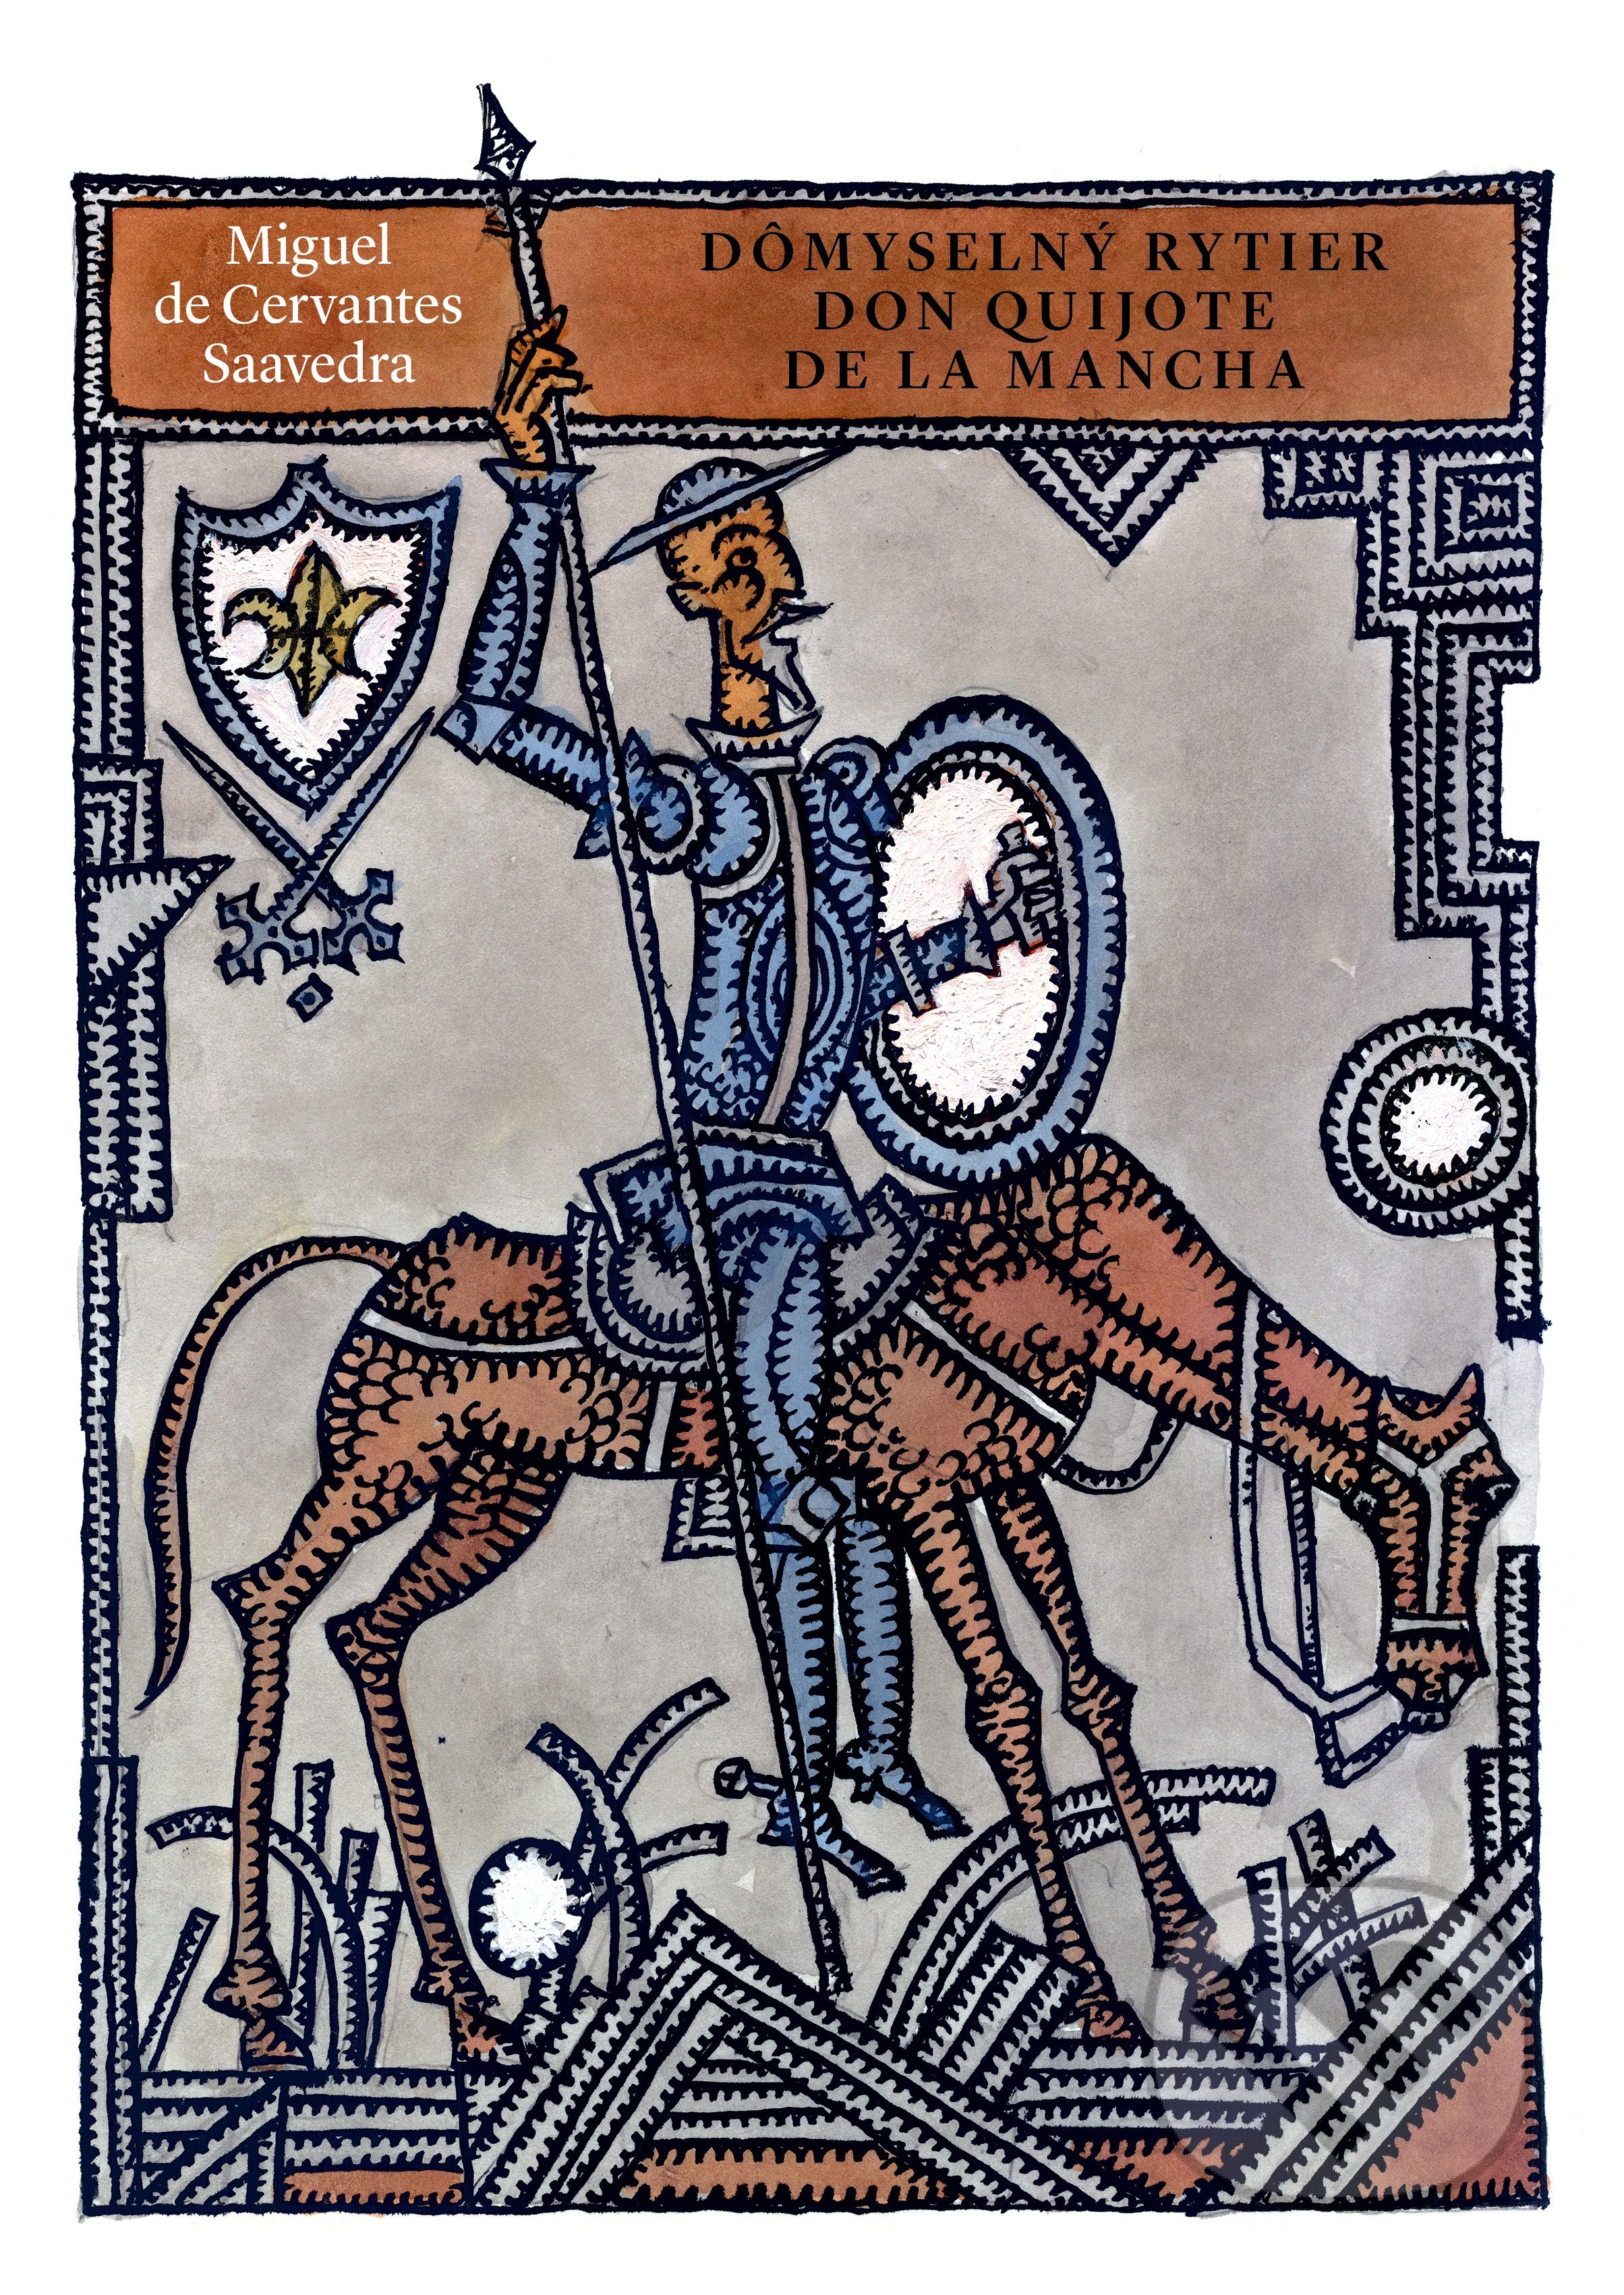 Dômyselný rytier don Quijote de la Mancha - Miguel de Cervantes Saavedra, Miroslav Cipár (ilustrátor), Spolok svätého Vojtecha, 2021